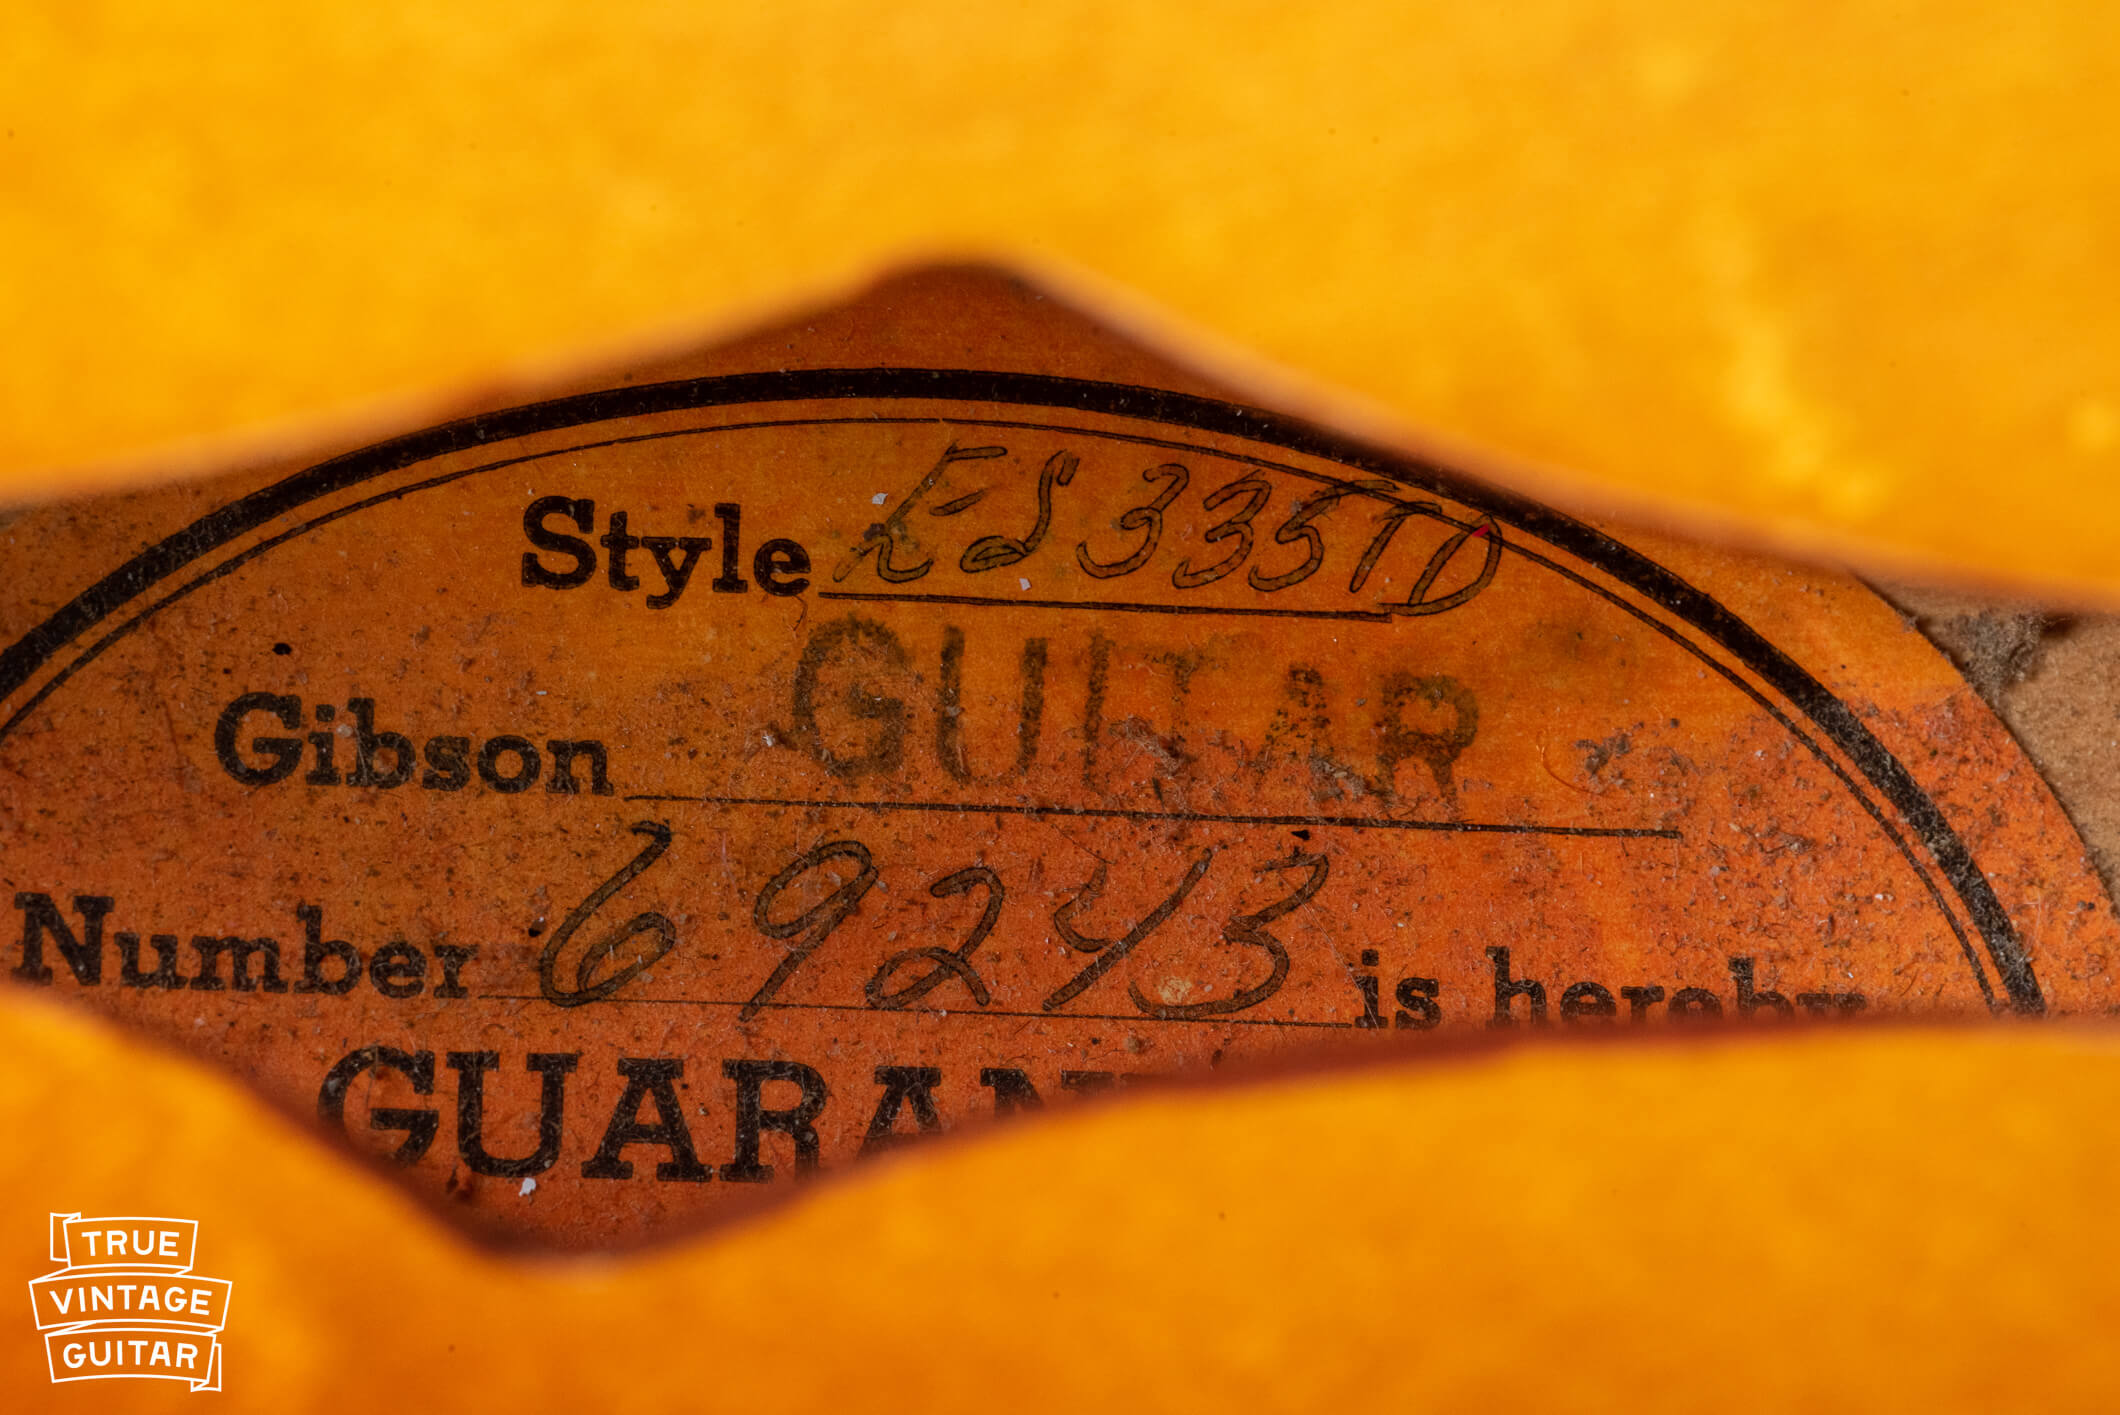 1964 Gibson ES-335 serial number on orange label